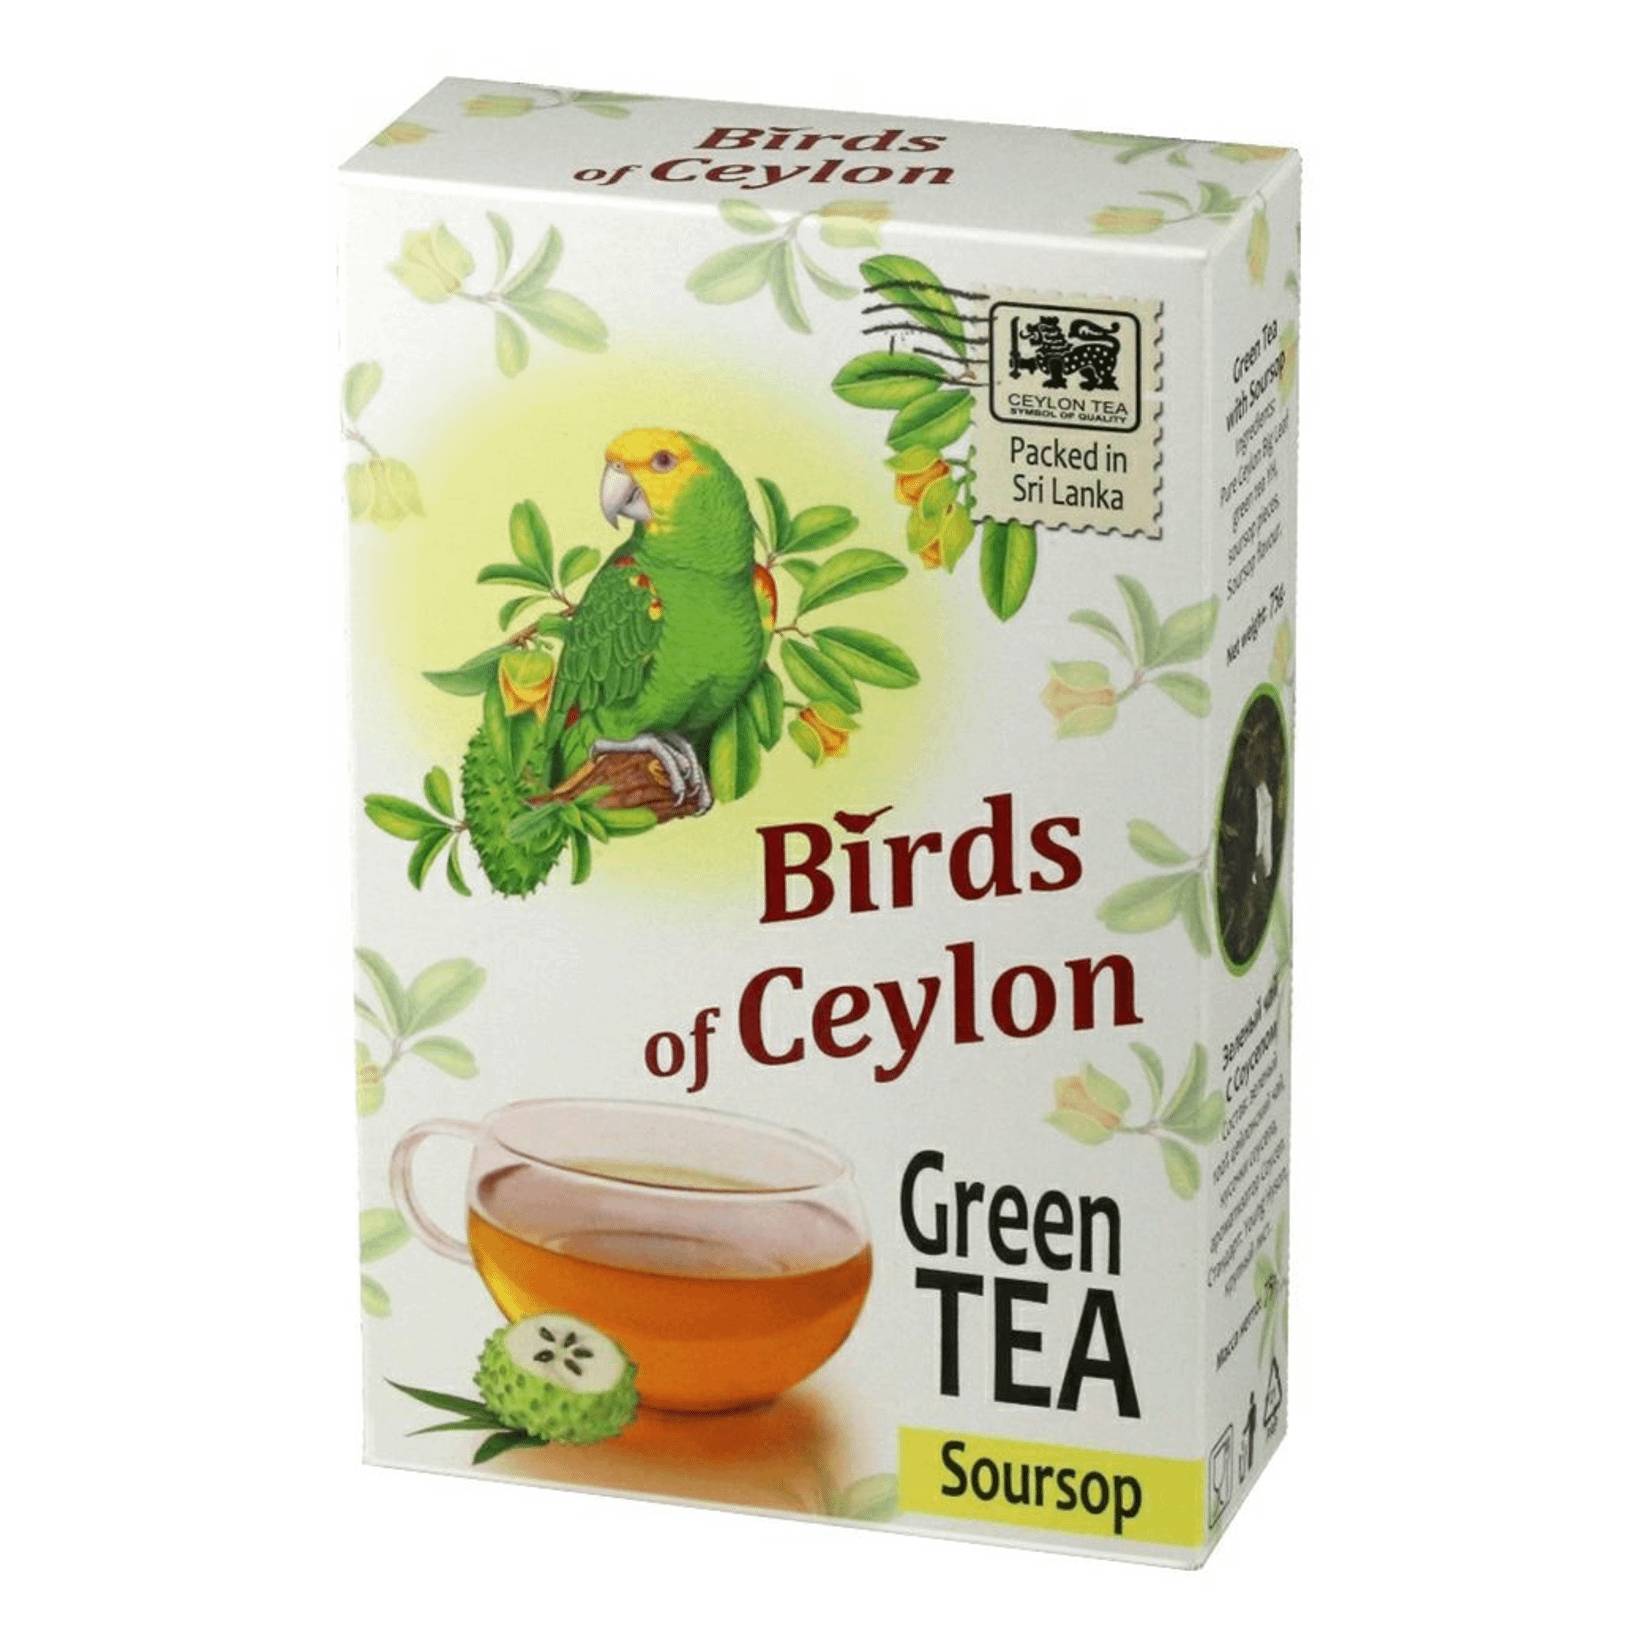 чай birds of ceylon птицы цейлона жасмин зеленый 75 г Чай Birds Of Ceylon птицы цейлона соусэп зеленый, 75 г